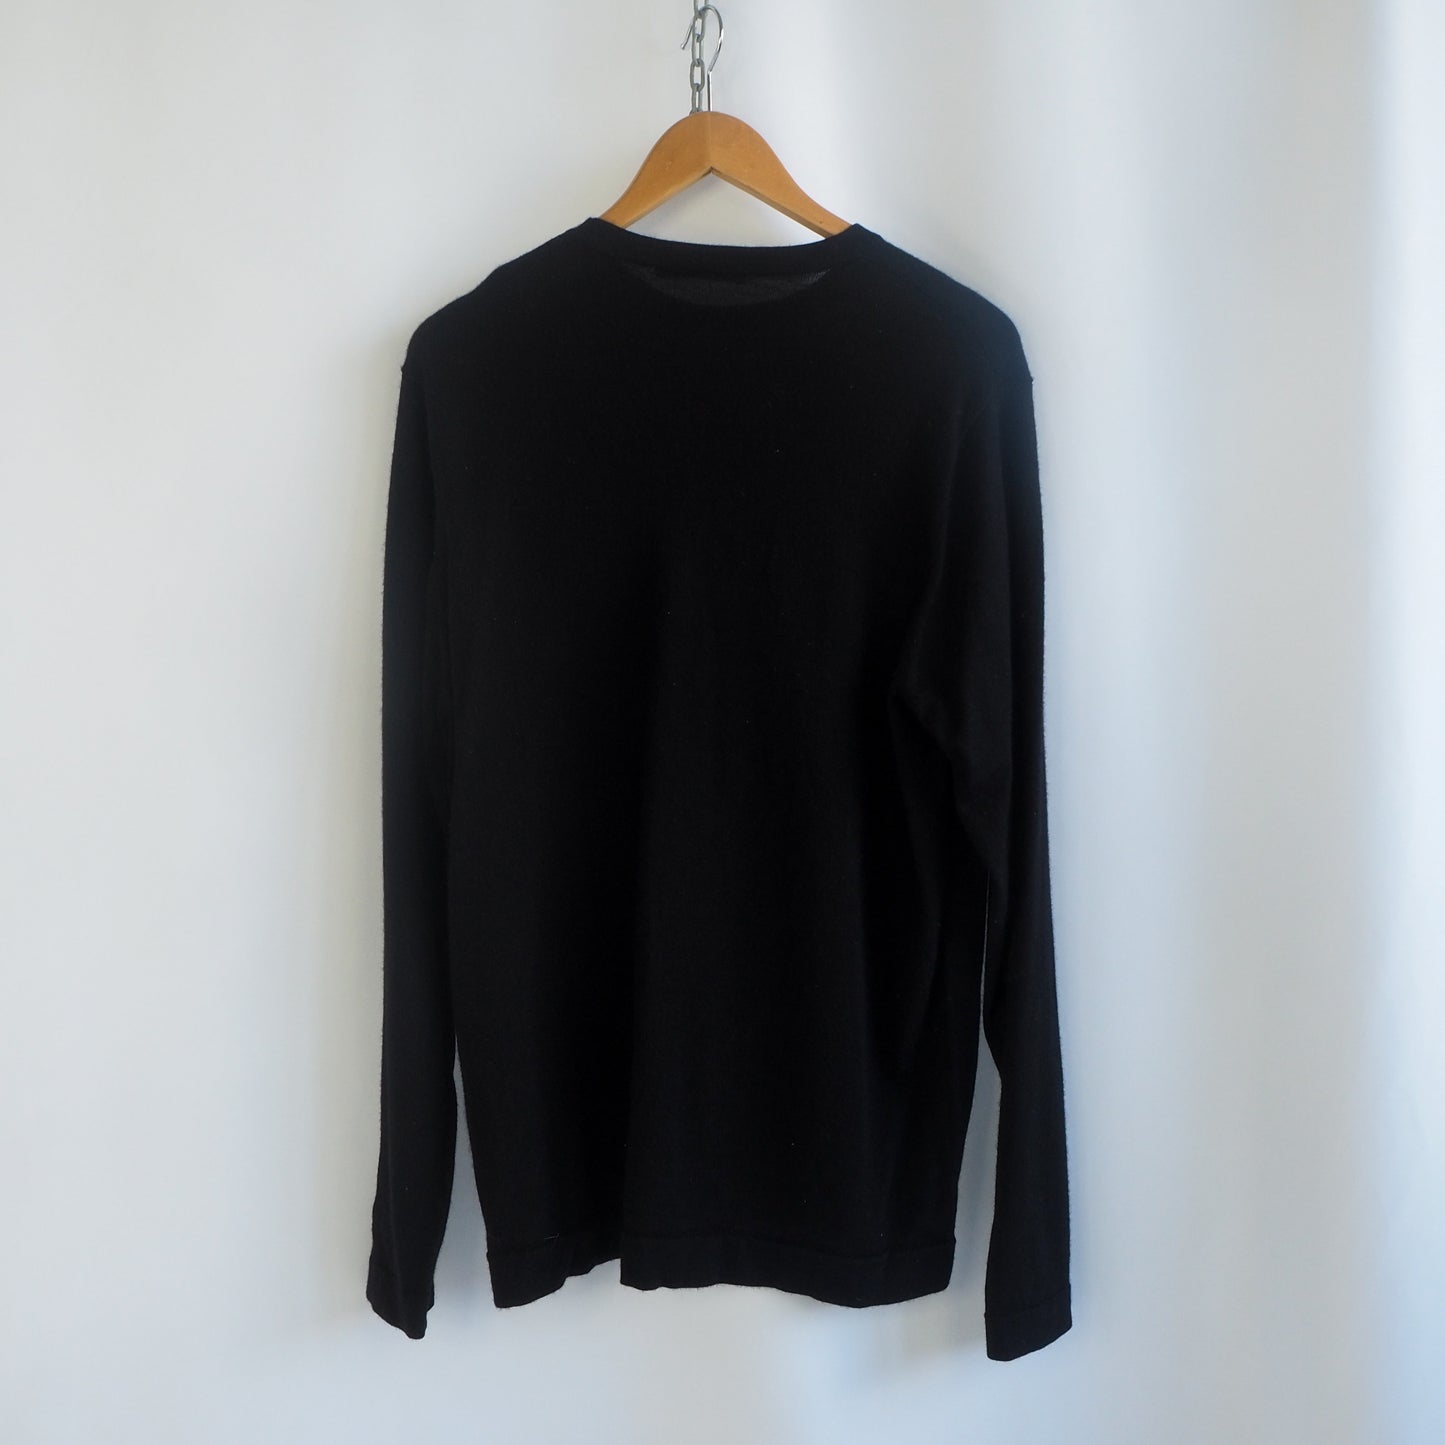 Barkers | Lightweight Wool Knit Sweater (XL)